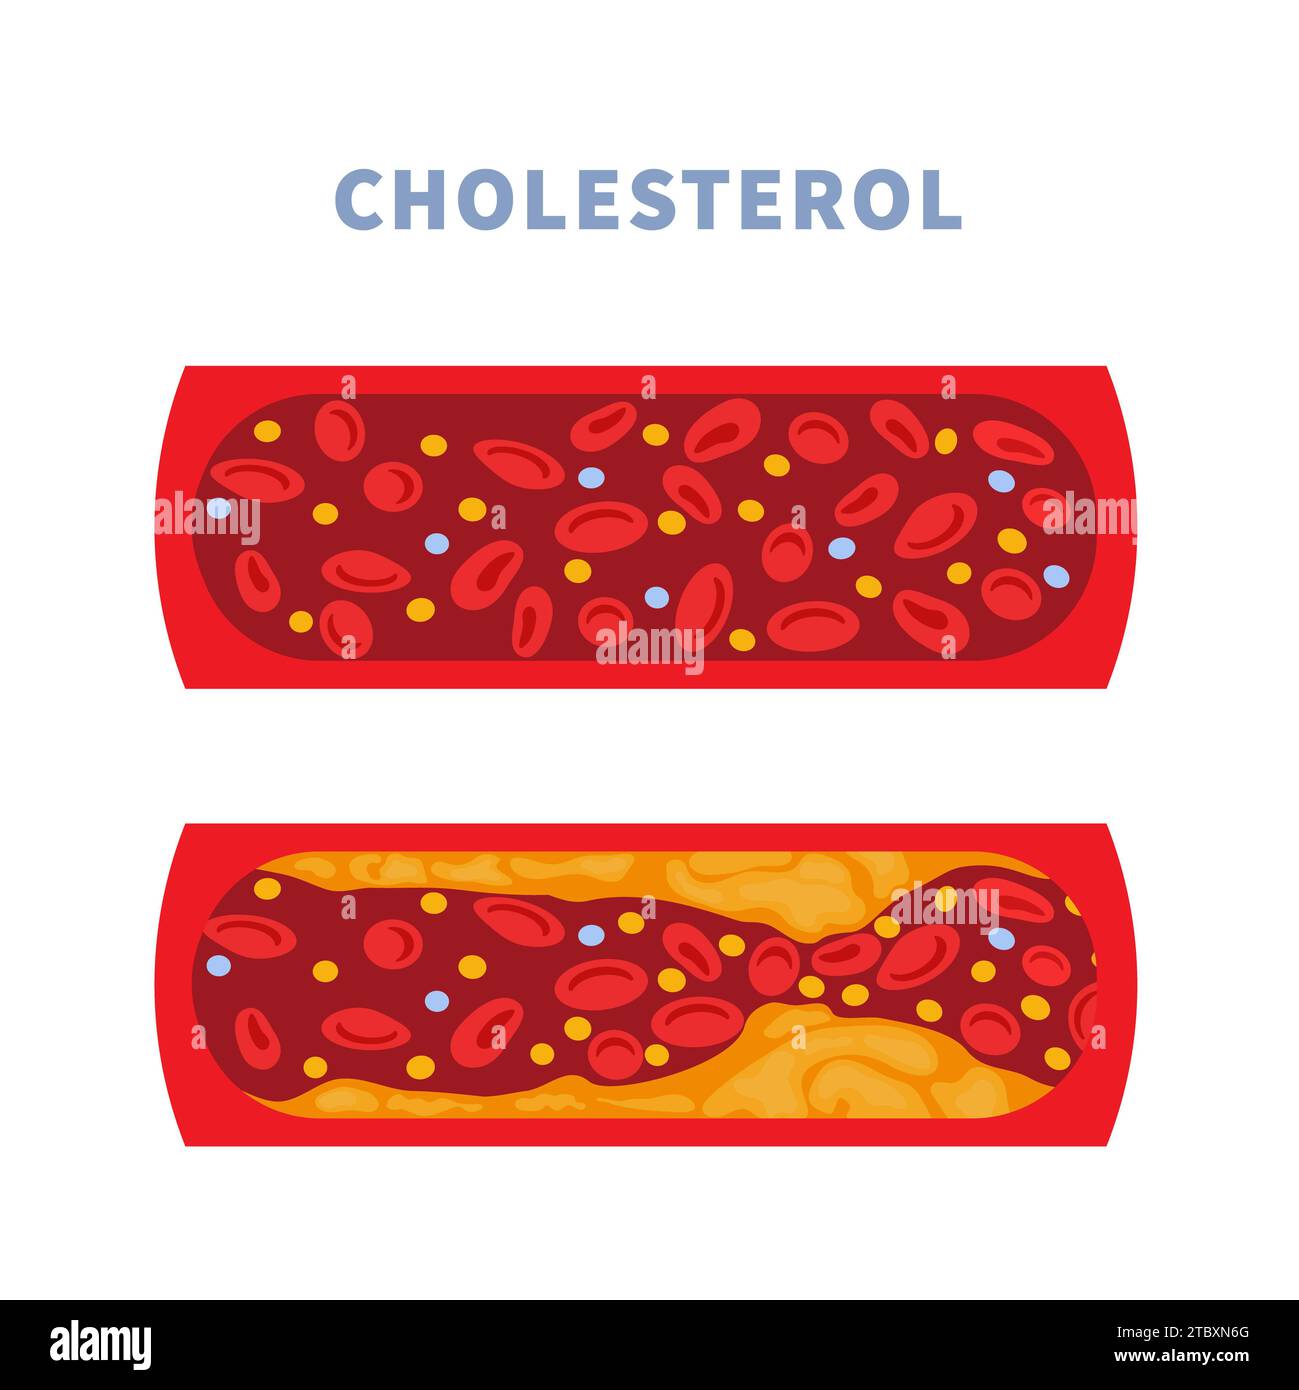 Artery health, conceptual illustration Stock Photo